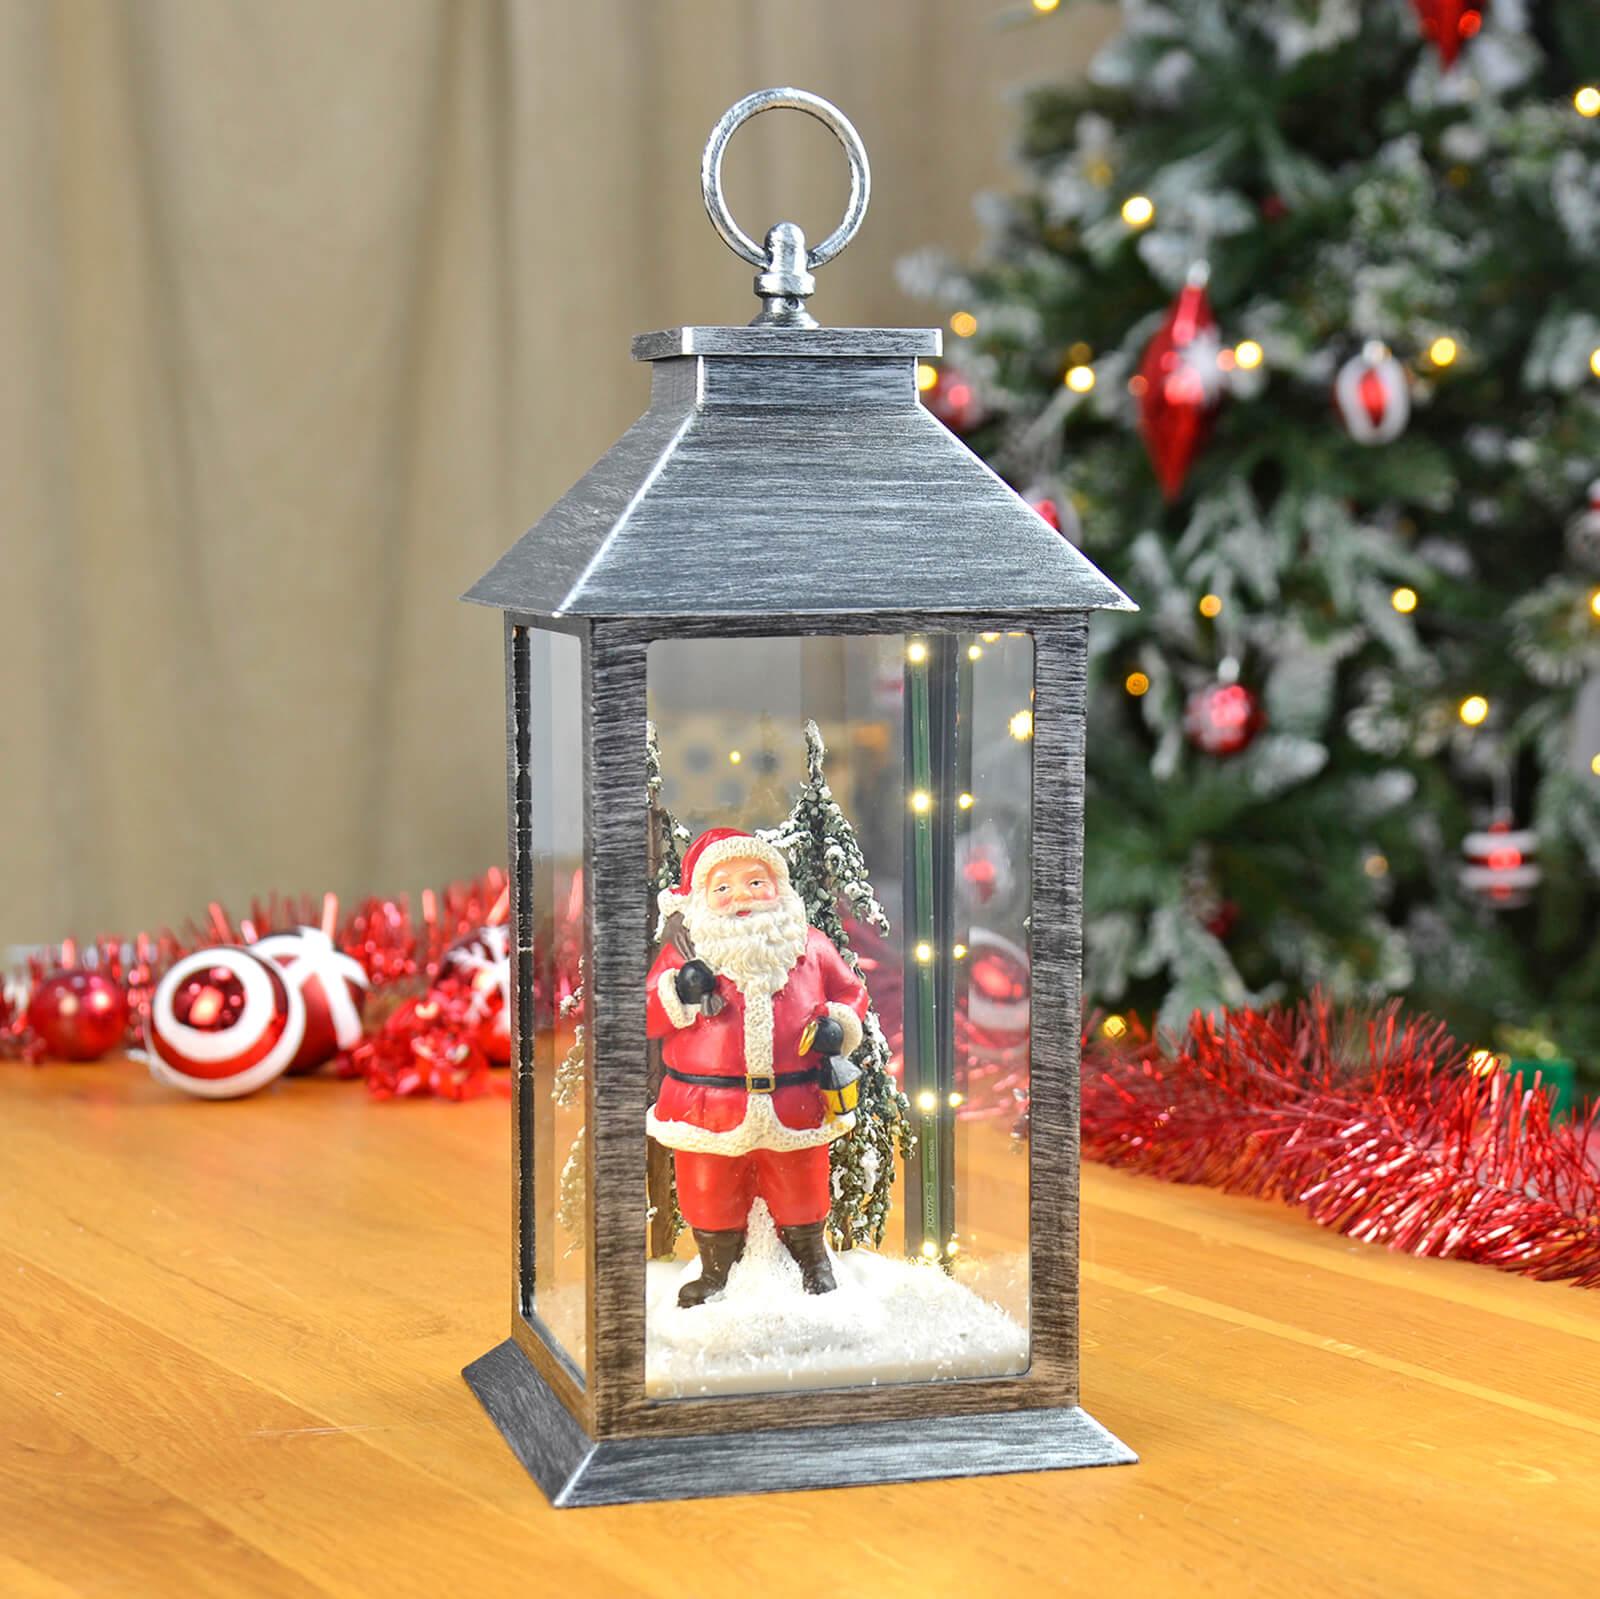 Mr Crimbo 13" Light Up Christmas Lantern Snowman Santa - MrCrimbo.co.uk -XS5722 - Snowman -christmas lantern decoration